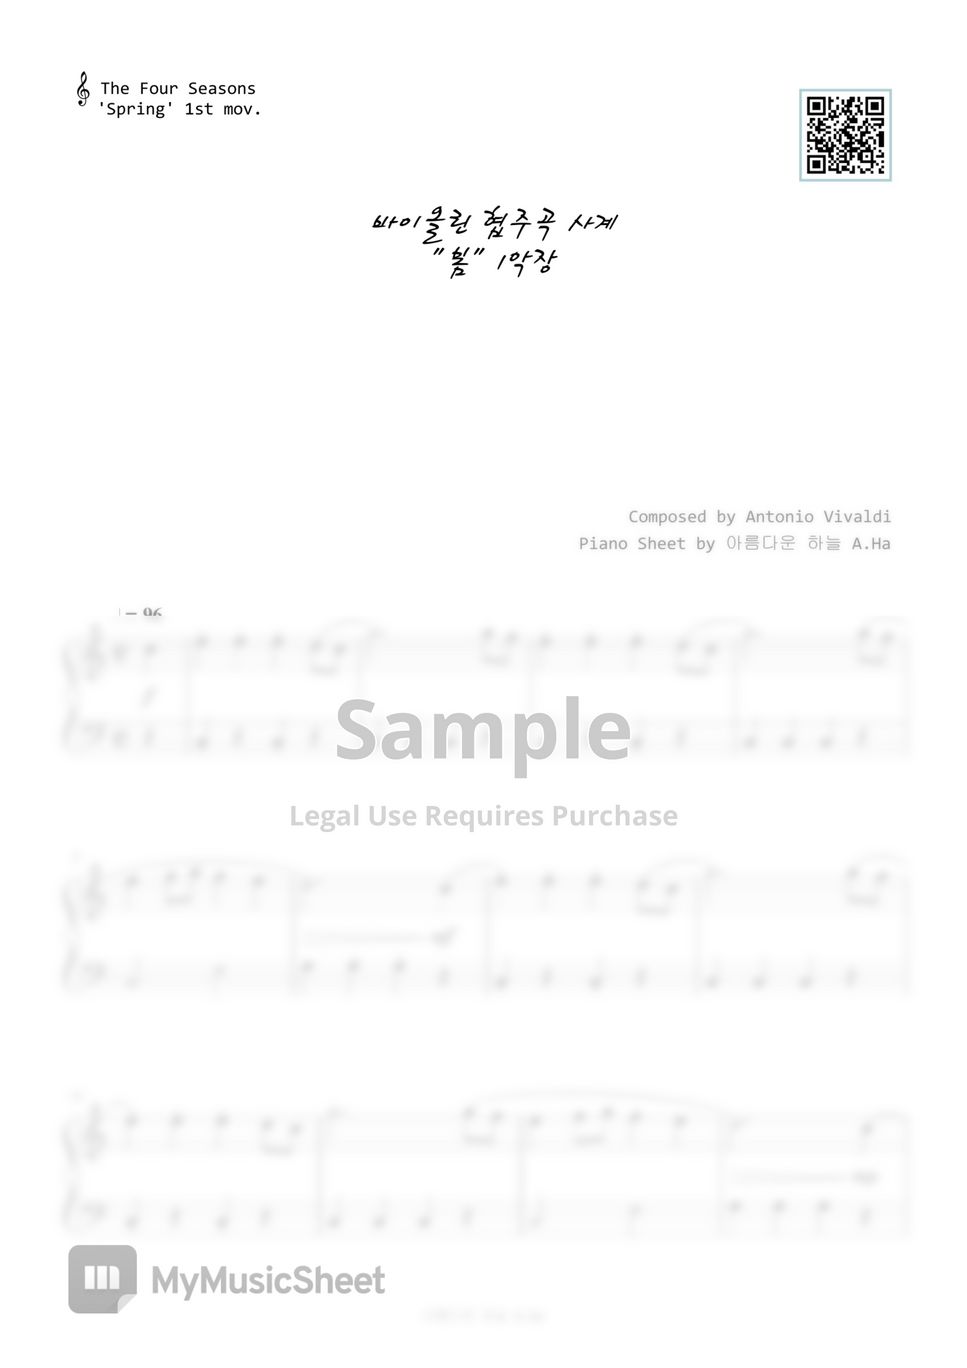 Vivaldi - Four Seasons (8 sheet music) by A.Ha